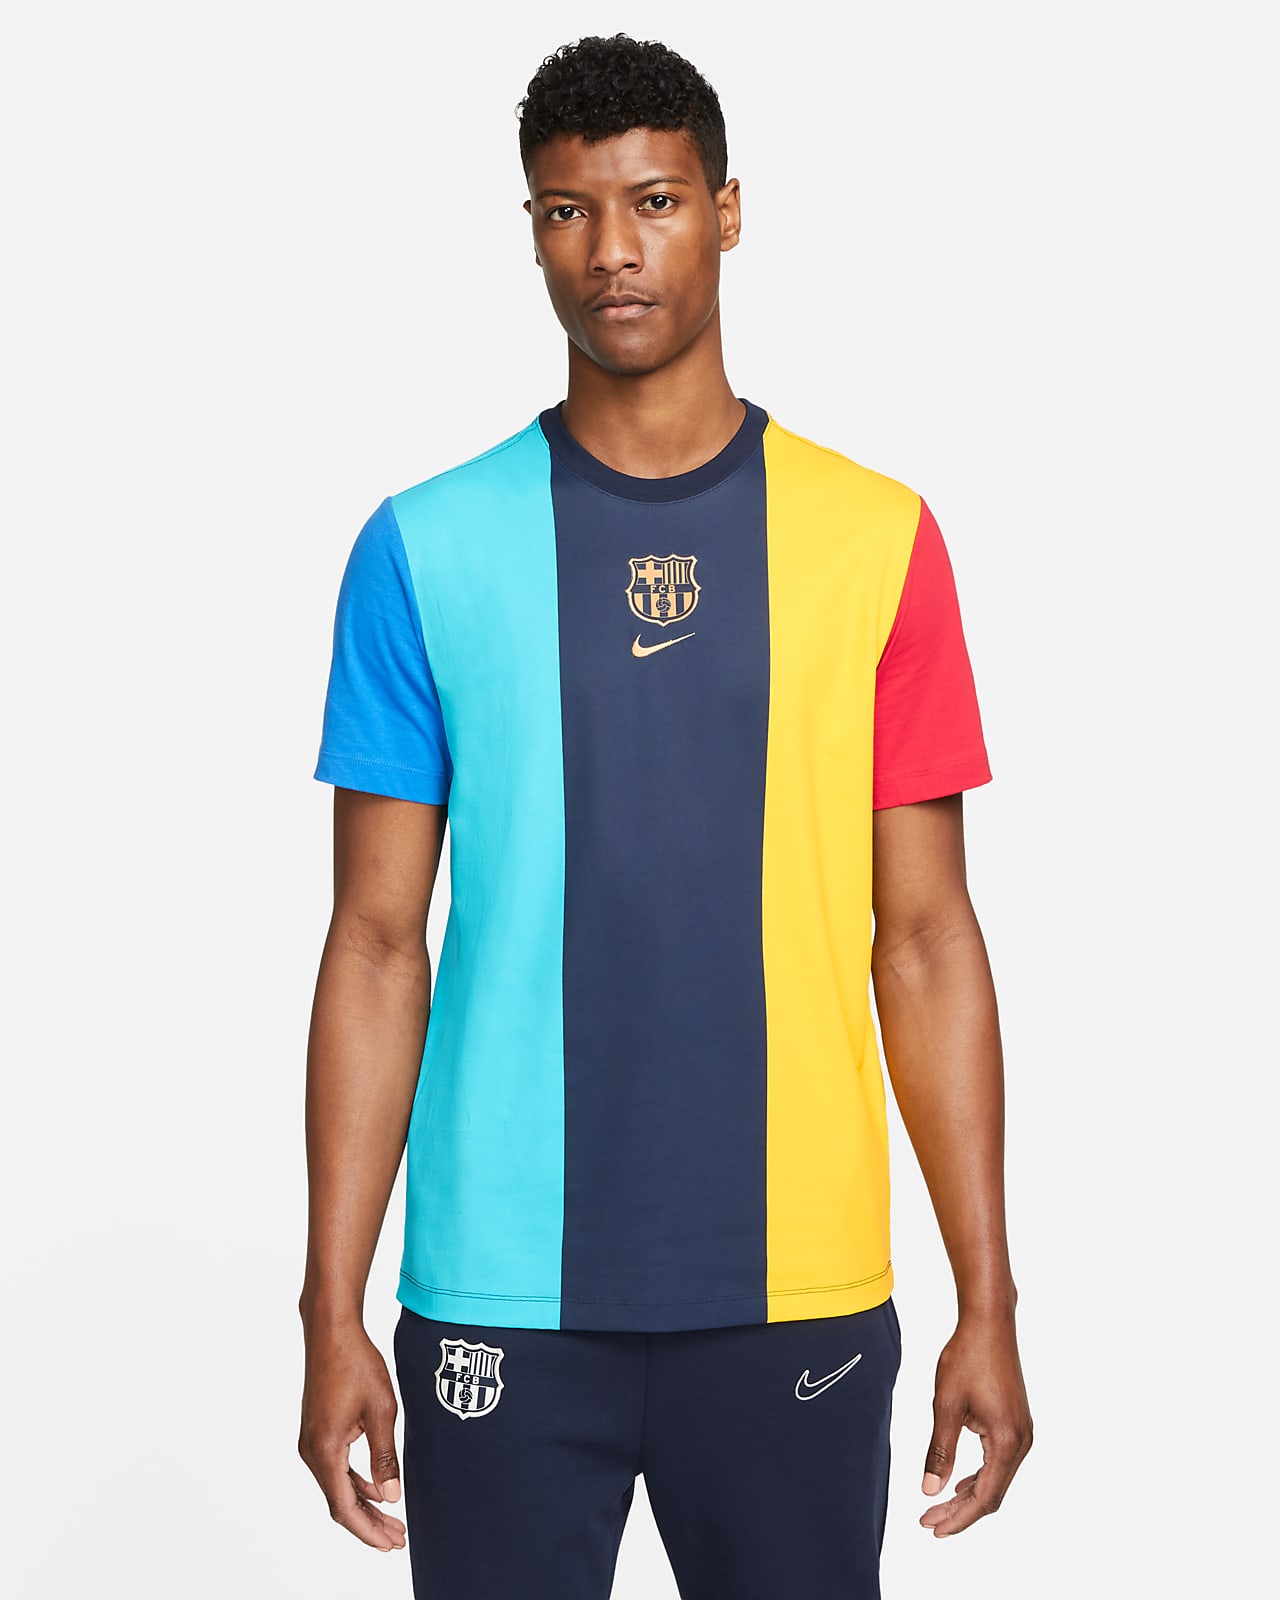 collide silhouette jewelry FC Barcelona Away Men's Soccer T-Shirt. Nike.com